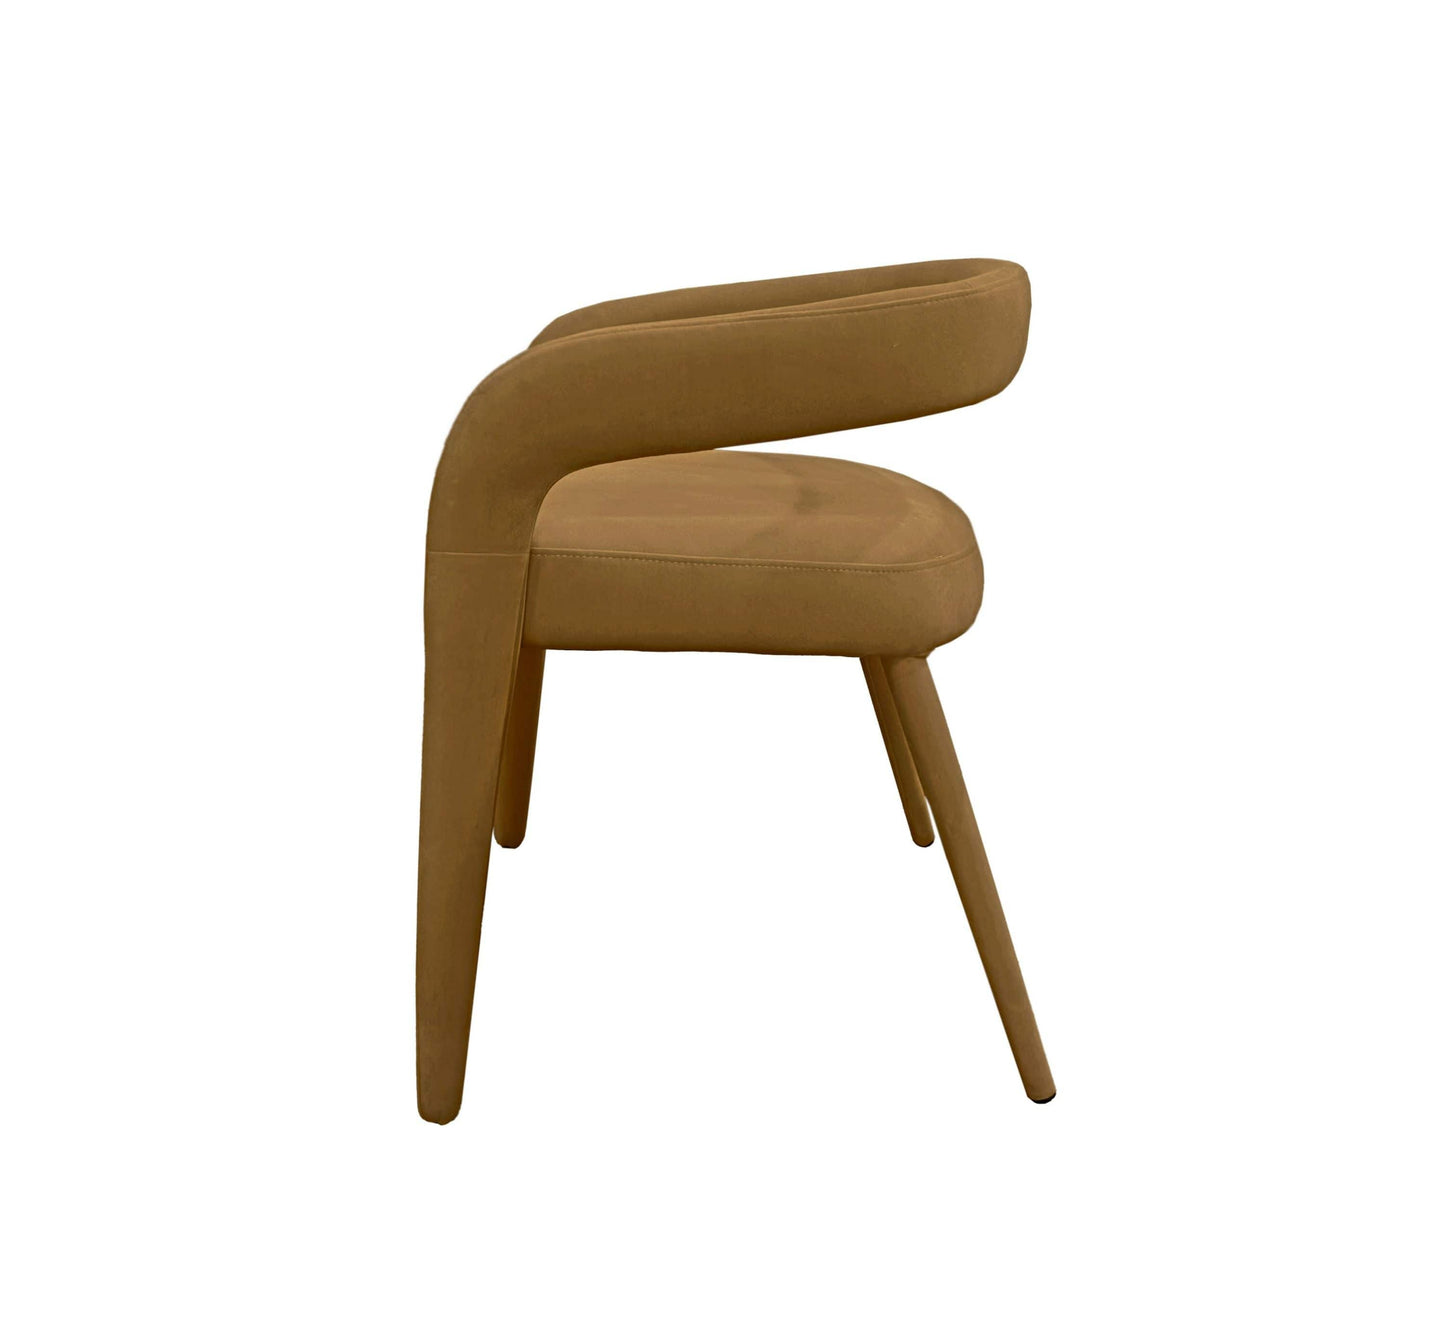 VIG Furniture Dining Chairs Modrest Mundra - Modern Tan Fabric Dining Chair